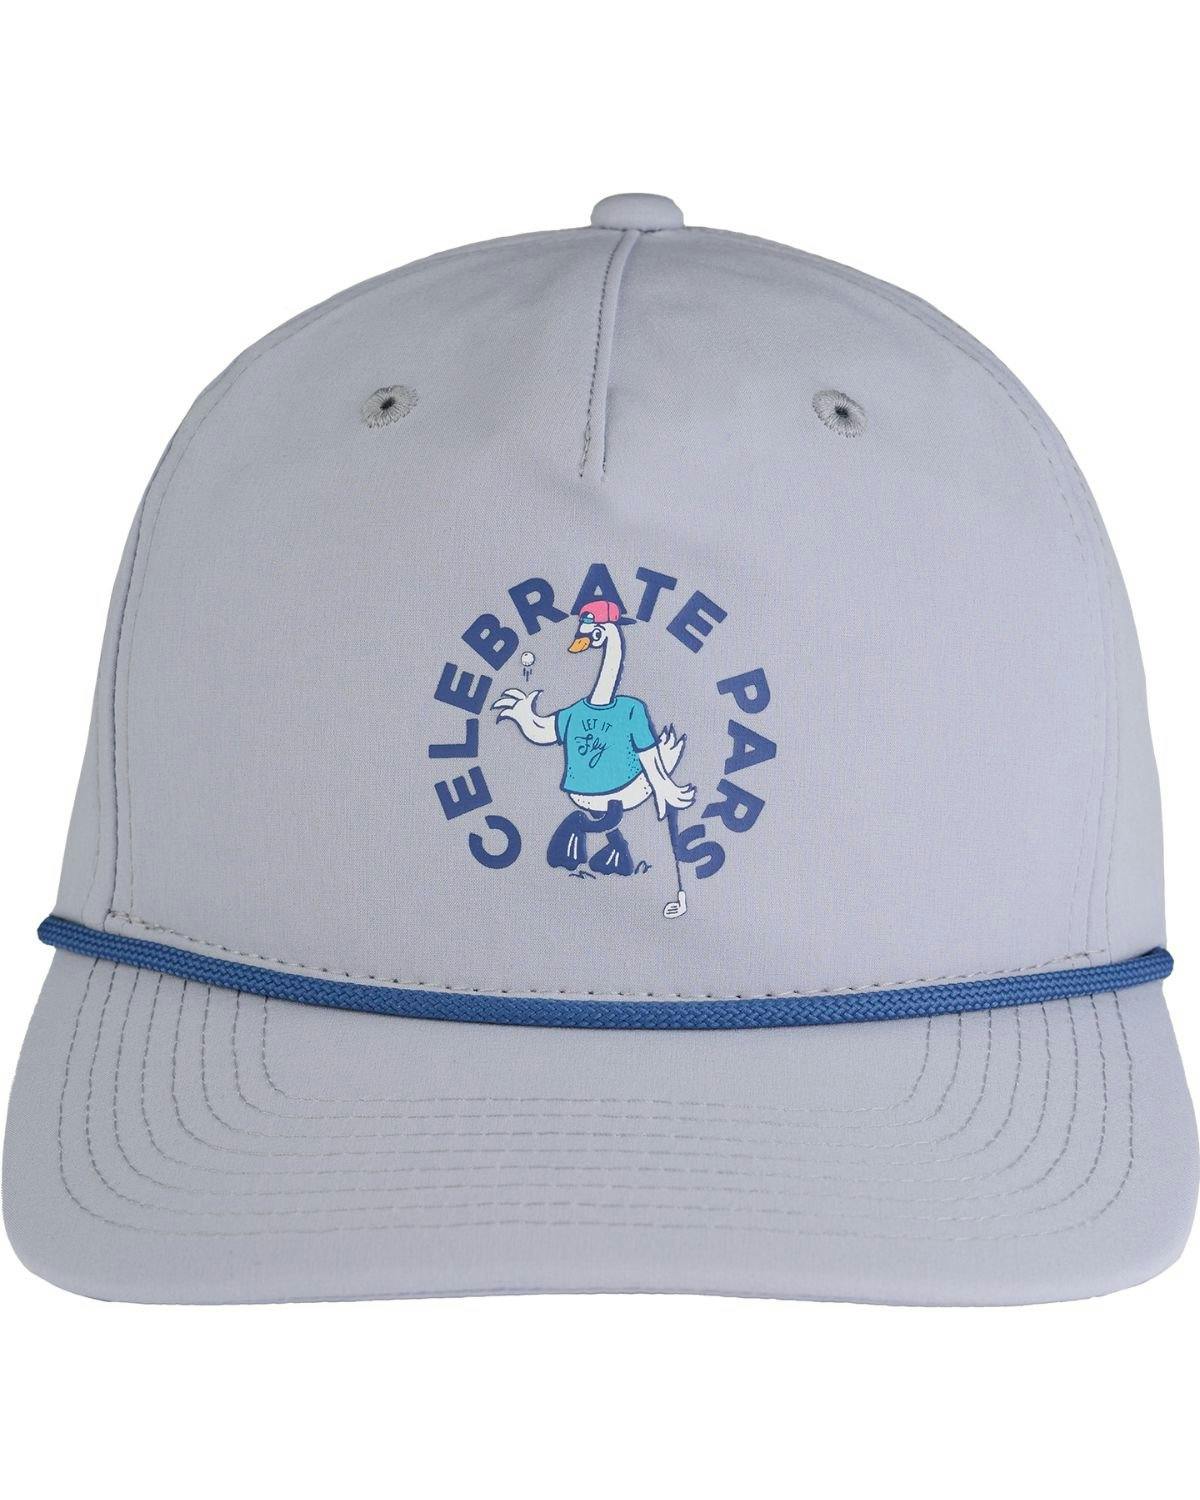 Image for Sady Hat